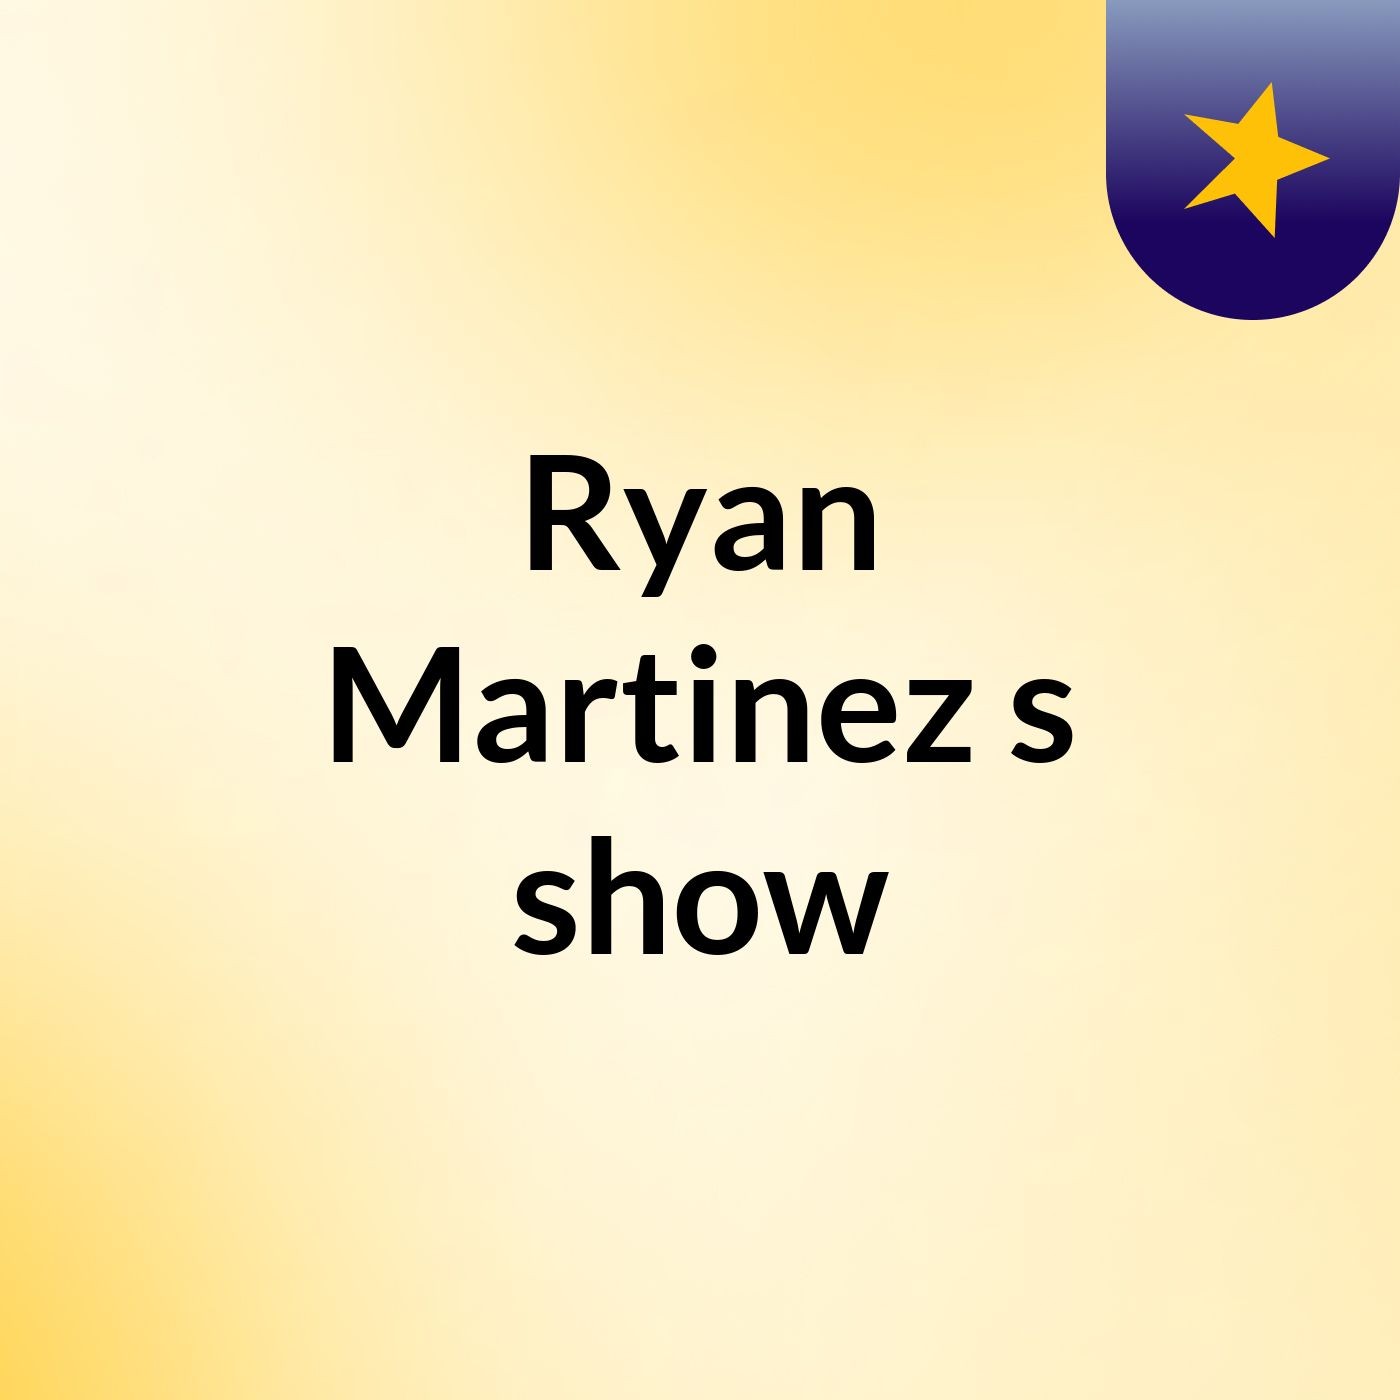 Ryan Martinez's show